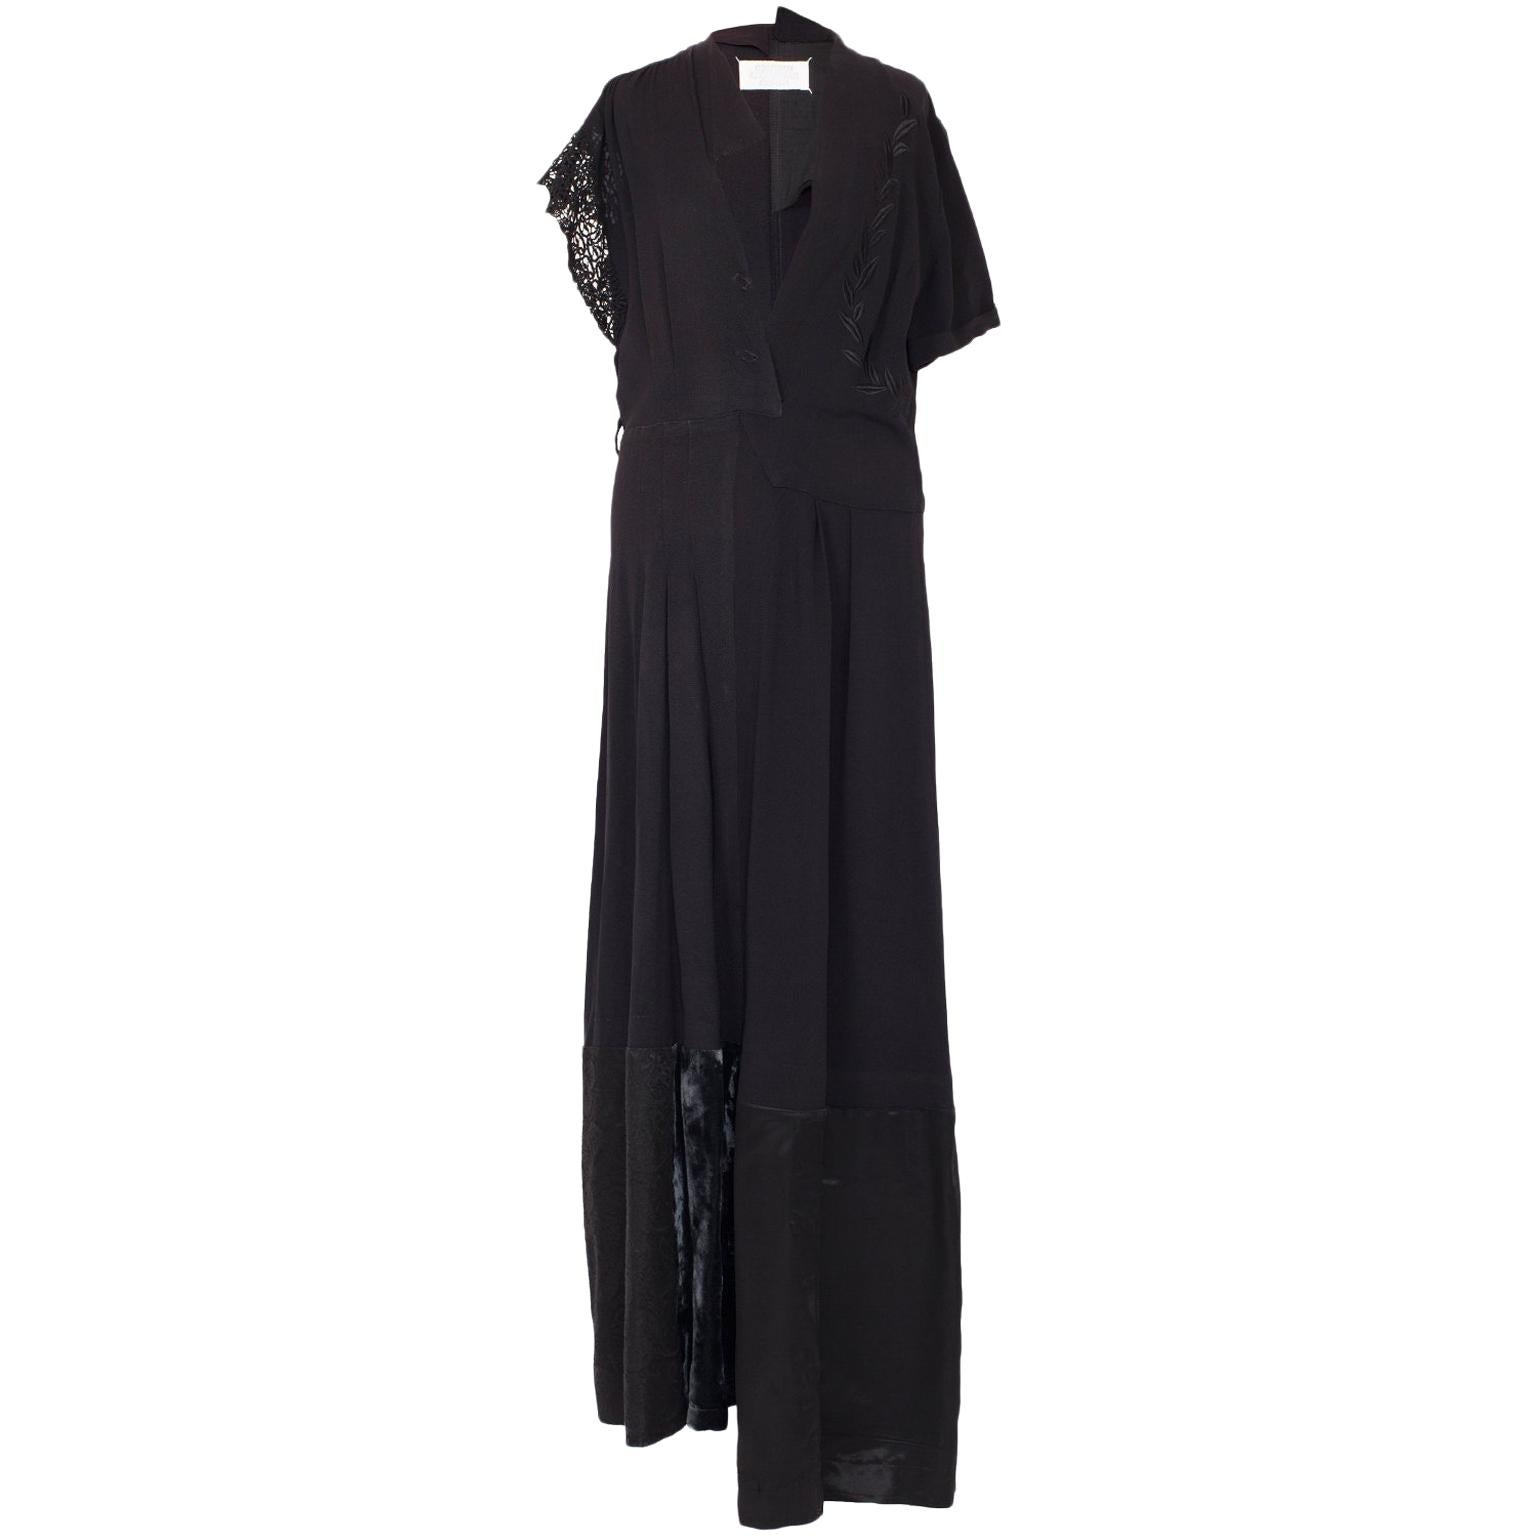 Martin Margiela Artisanal Deconstructed Black Dress, 1993 / SS 1994 at ...